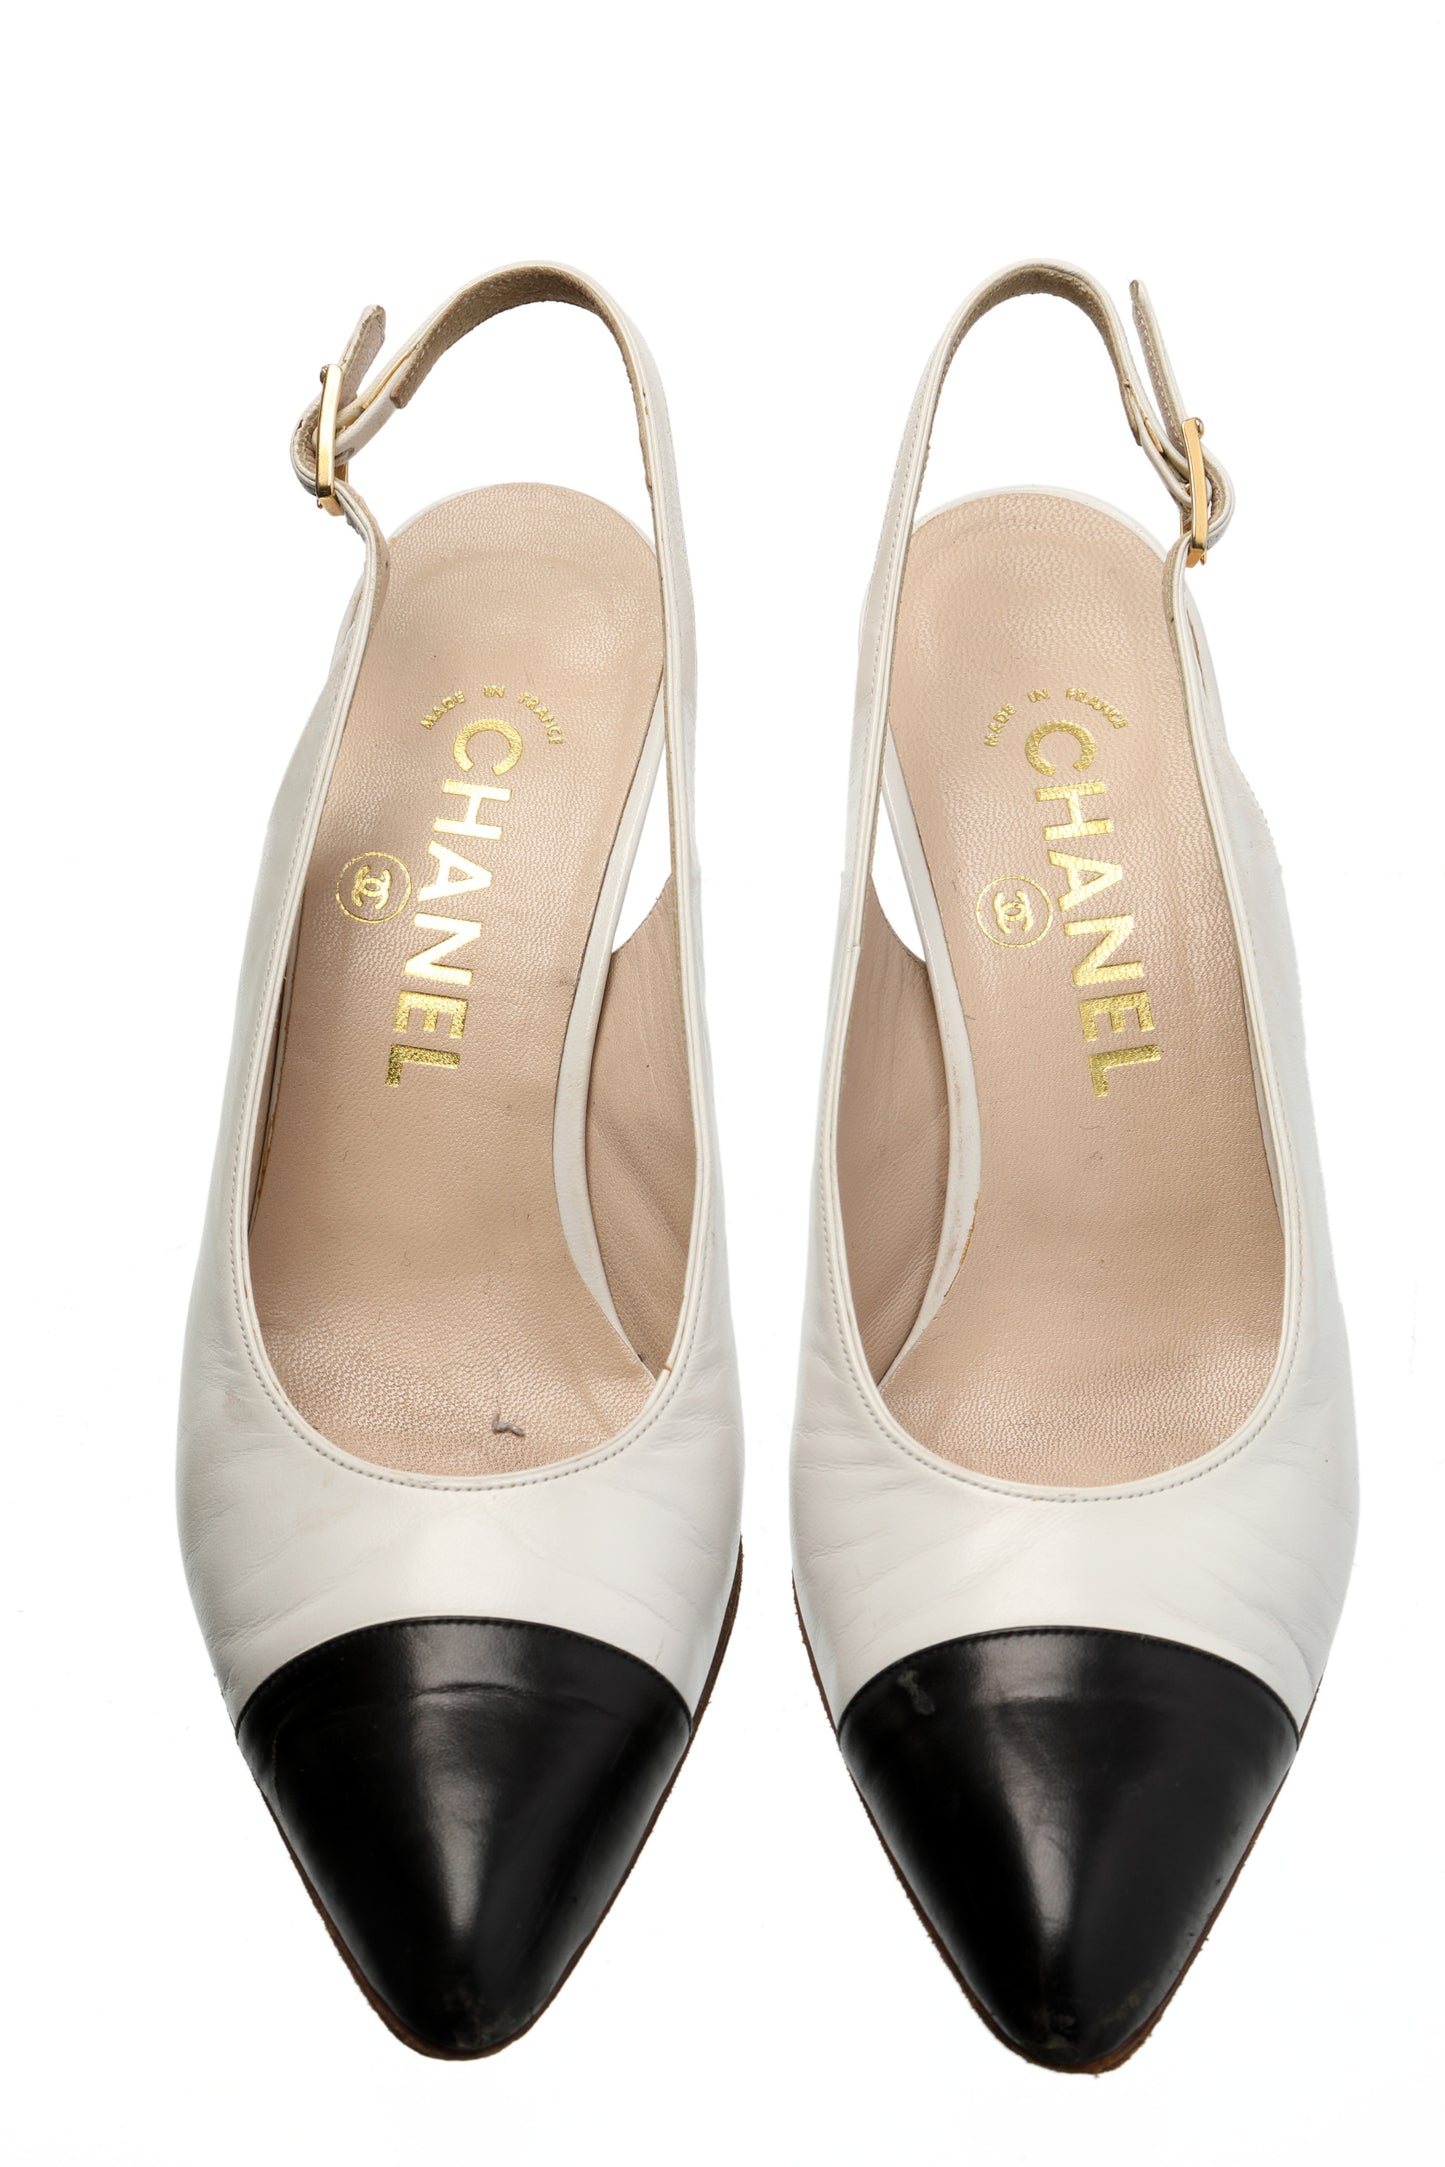 Chanel 90s slingback shoes